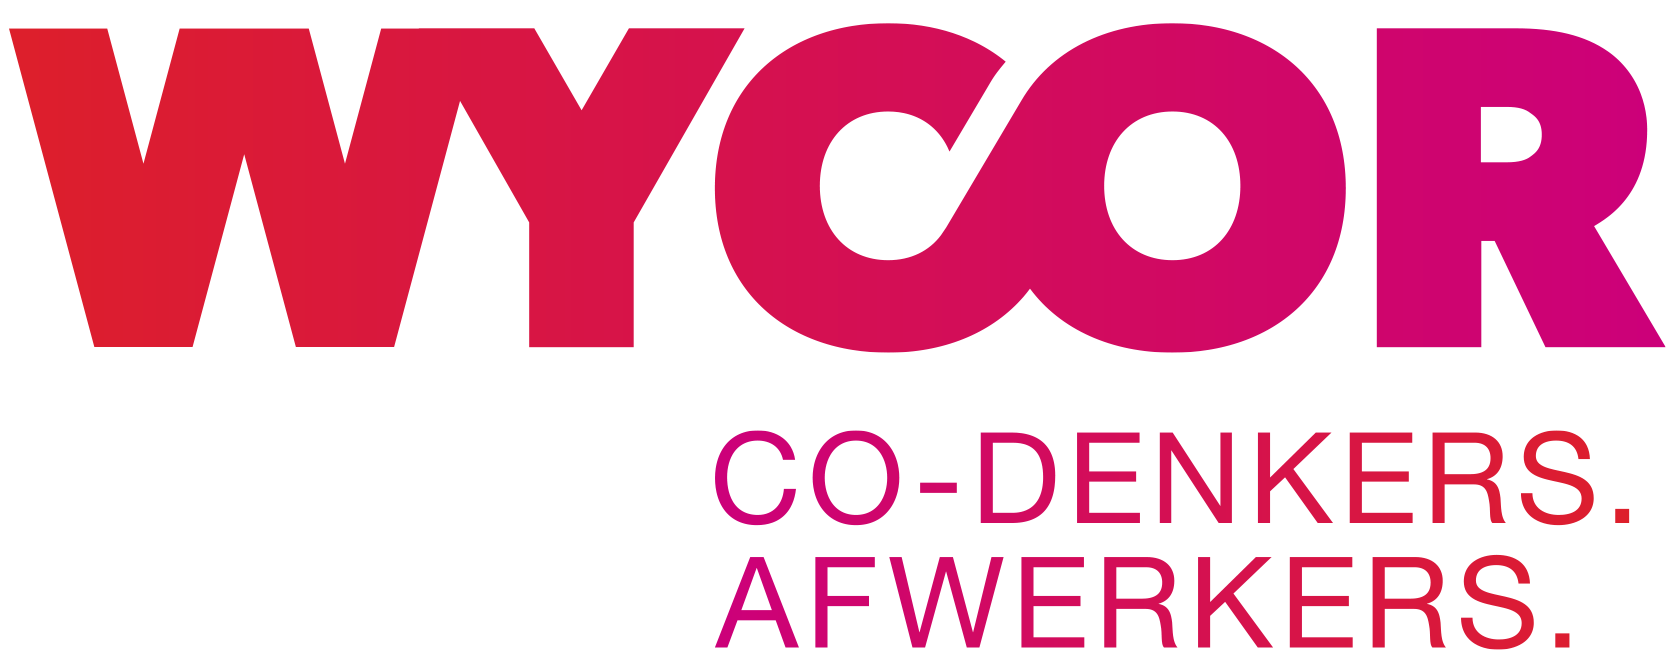 Logo Wycor 